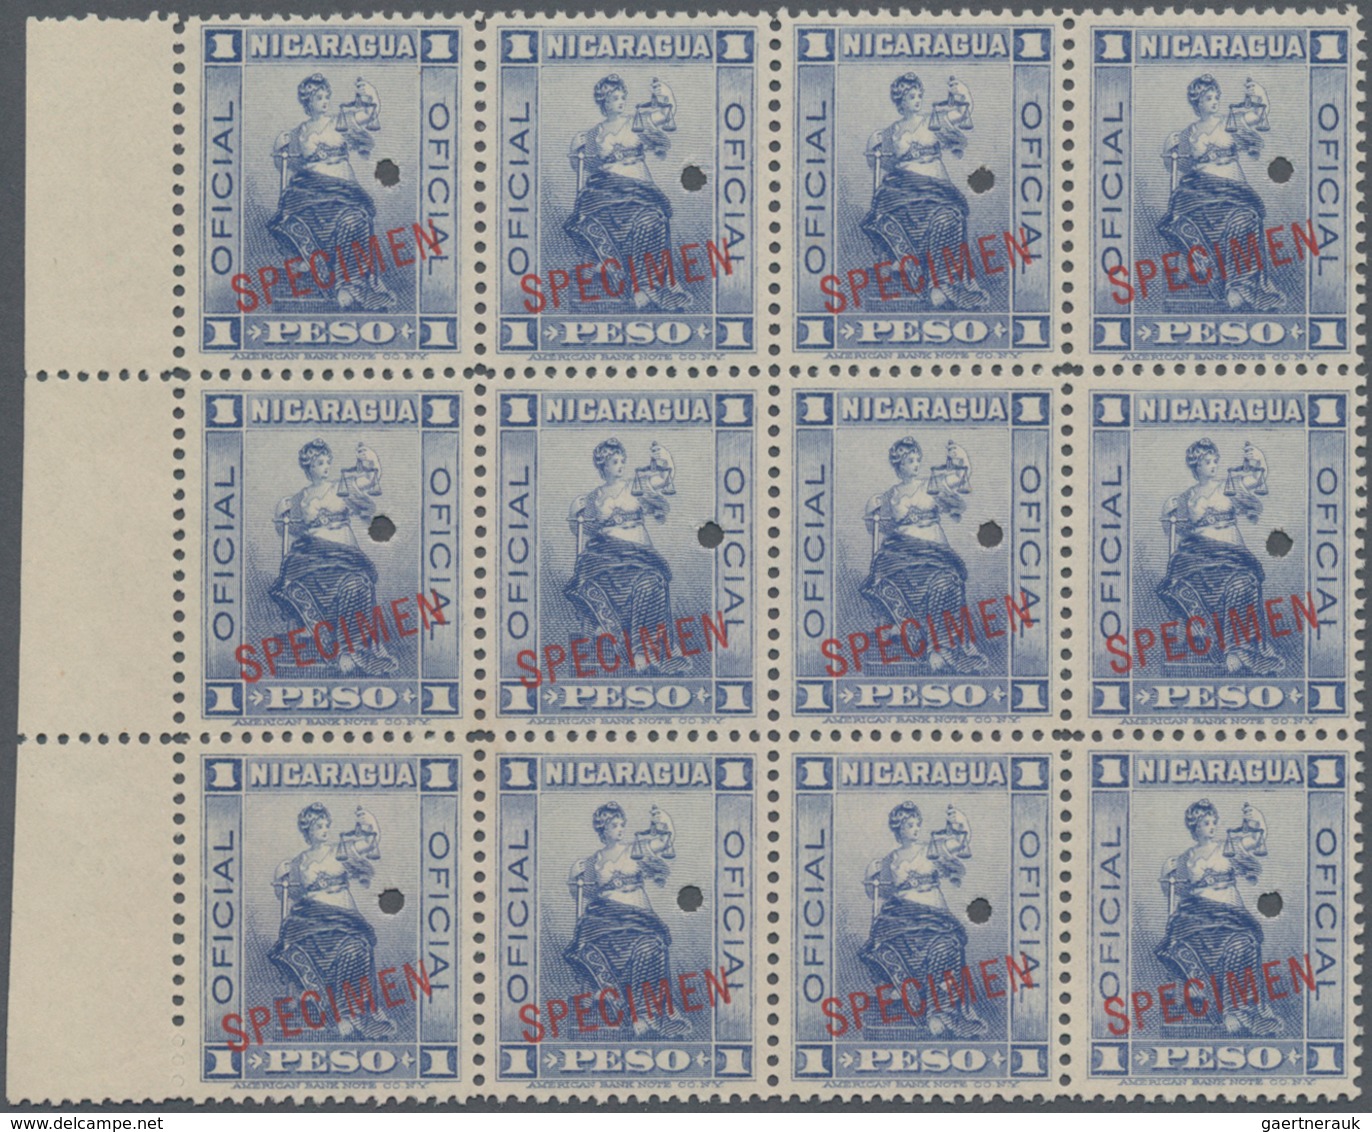 Thematik: Justiz / Justice: 1900, NICARAGUA: Official Stamp Issue 1peso Ultramarine 'Justice' Block - Police - Gendarmerie